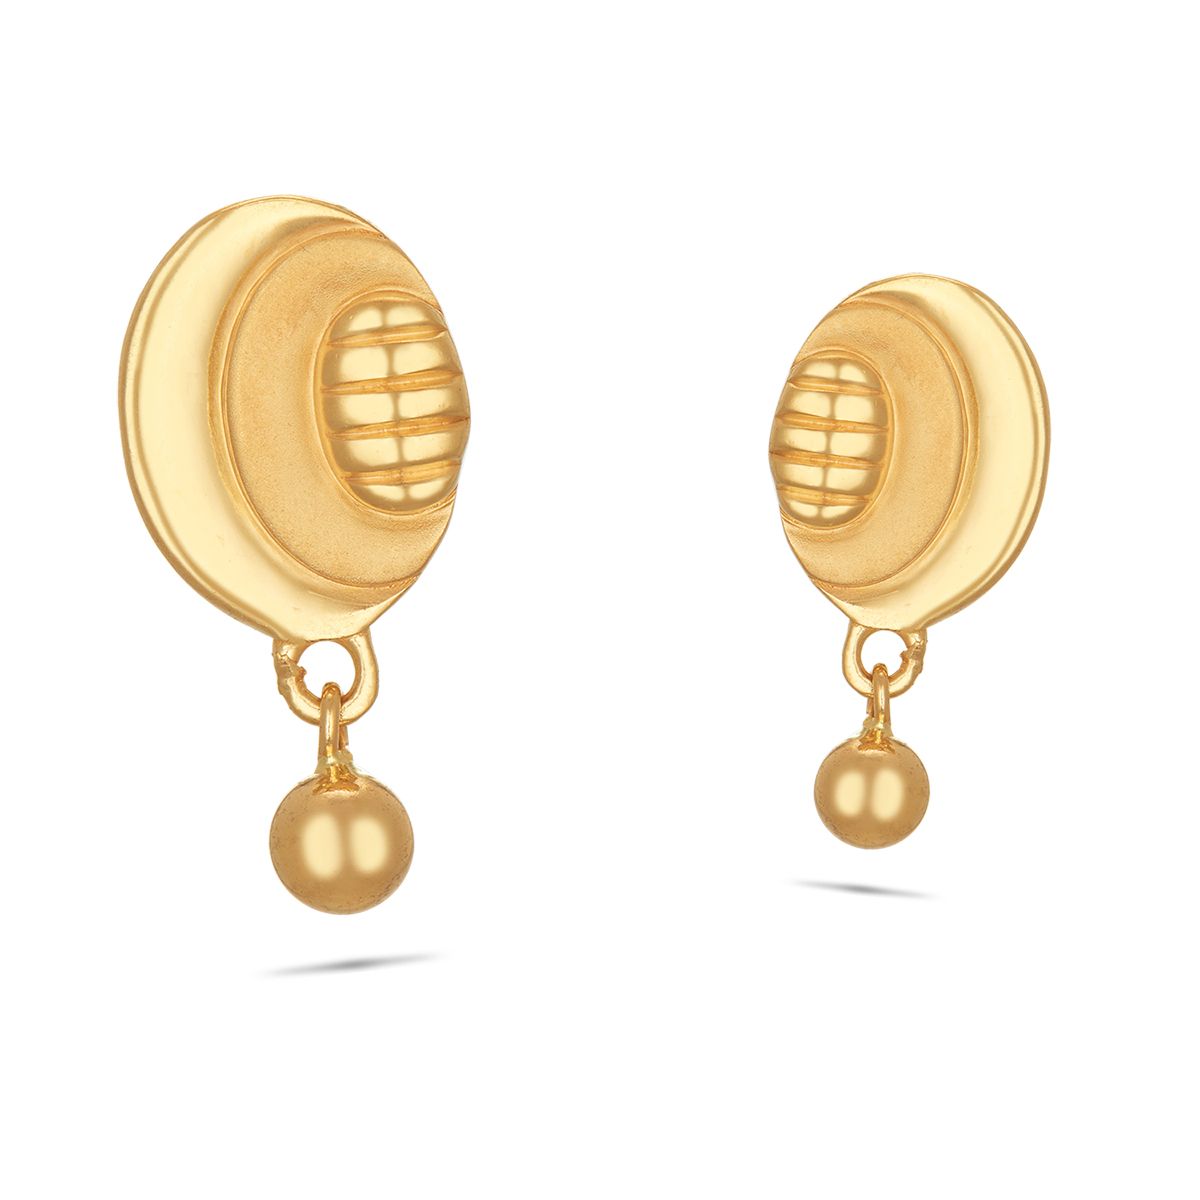 New Stylish Gold Earring